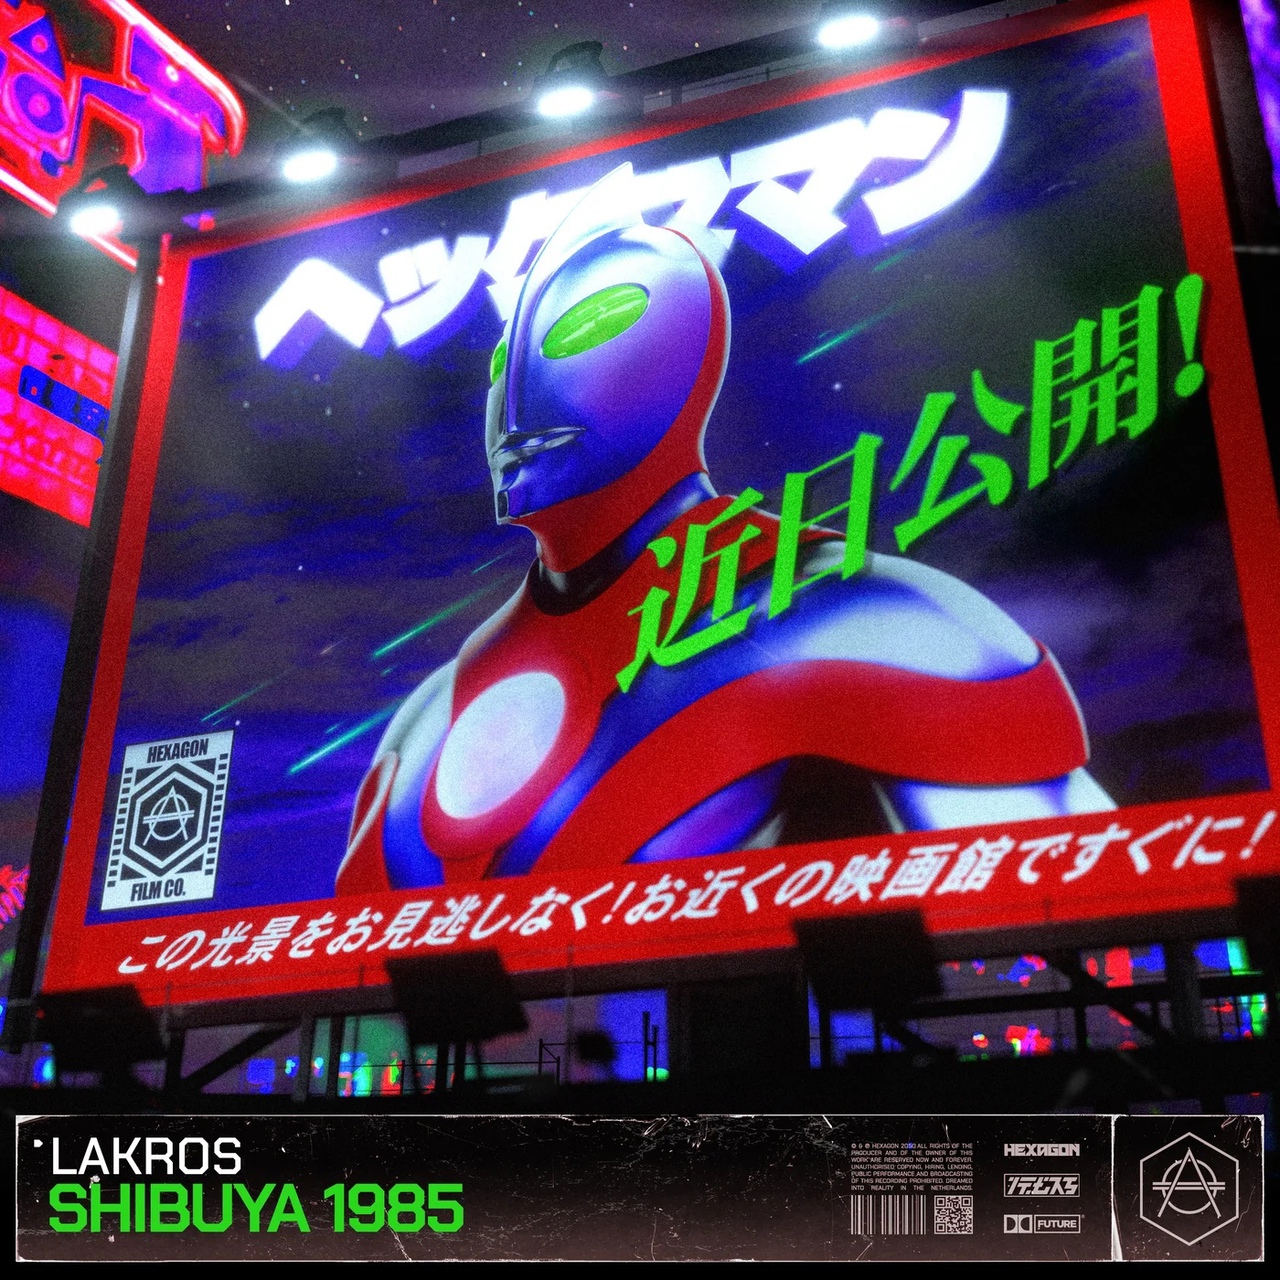 Lakros Shibuya 1985 cover artwork